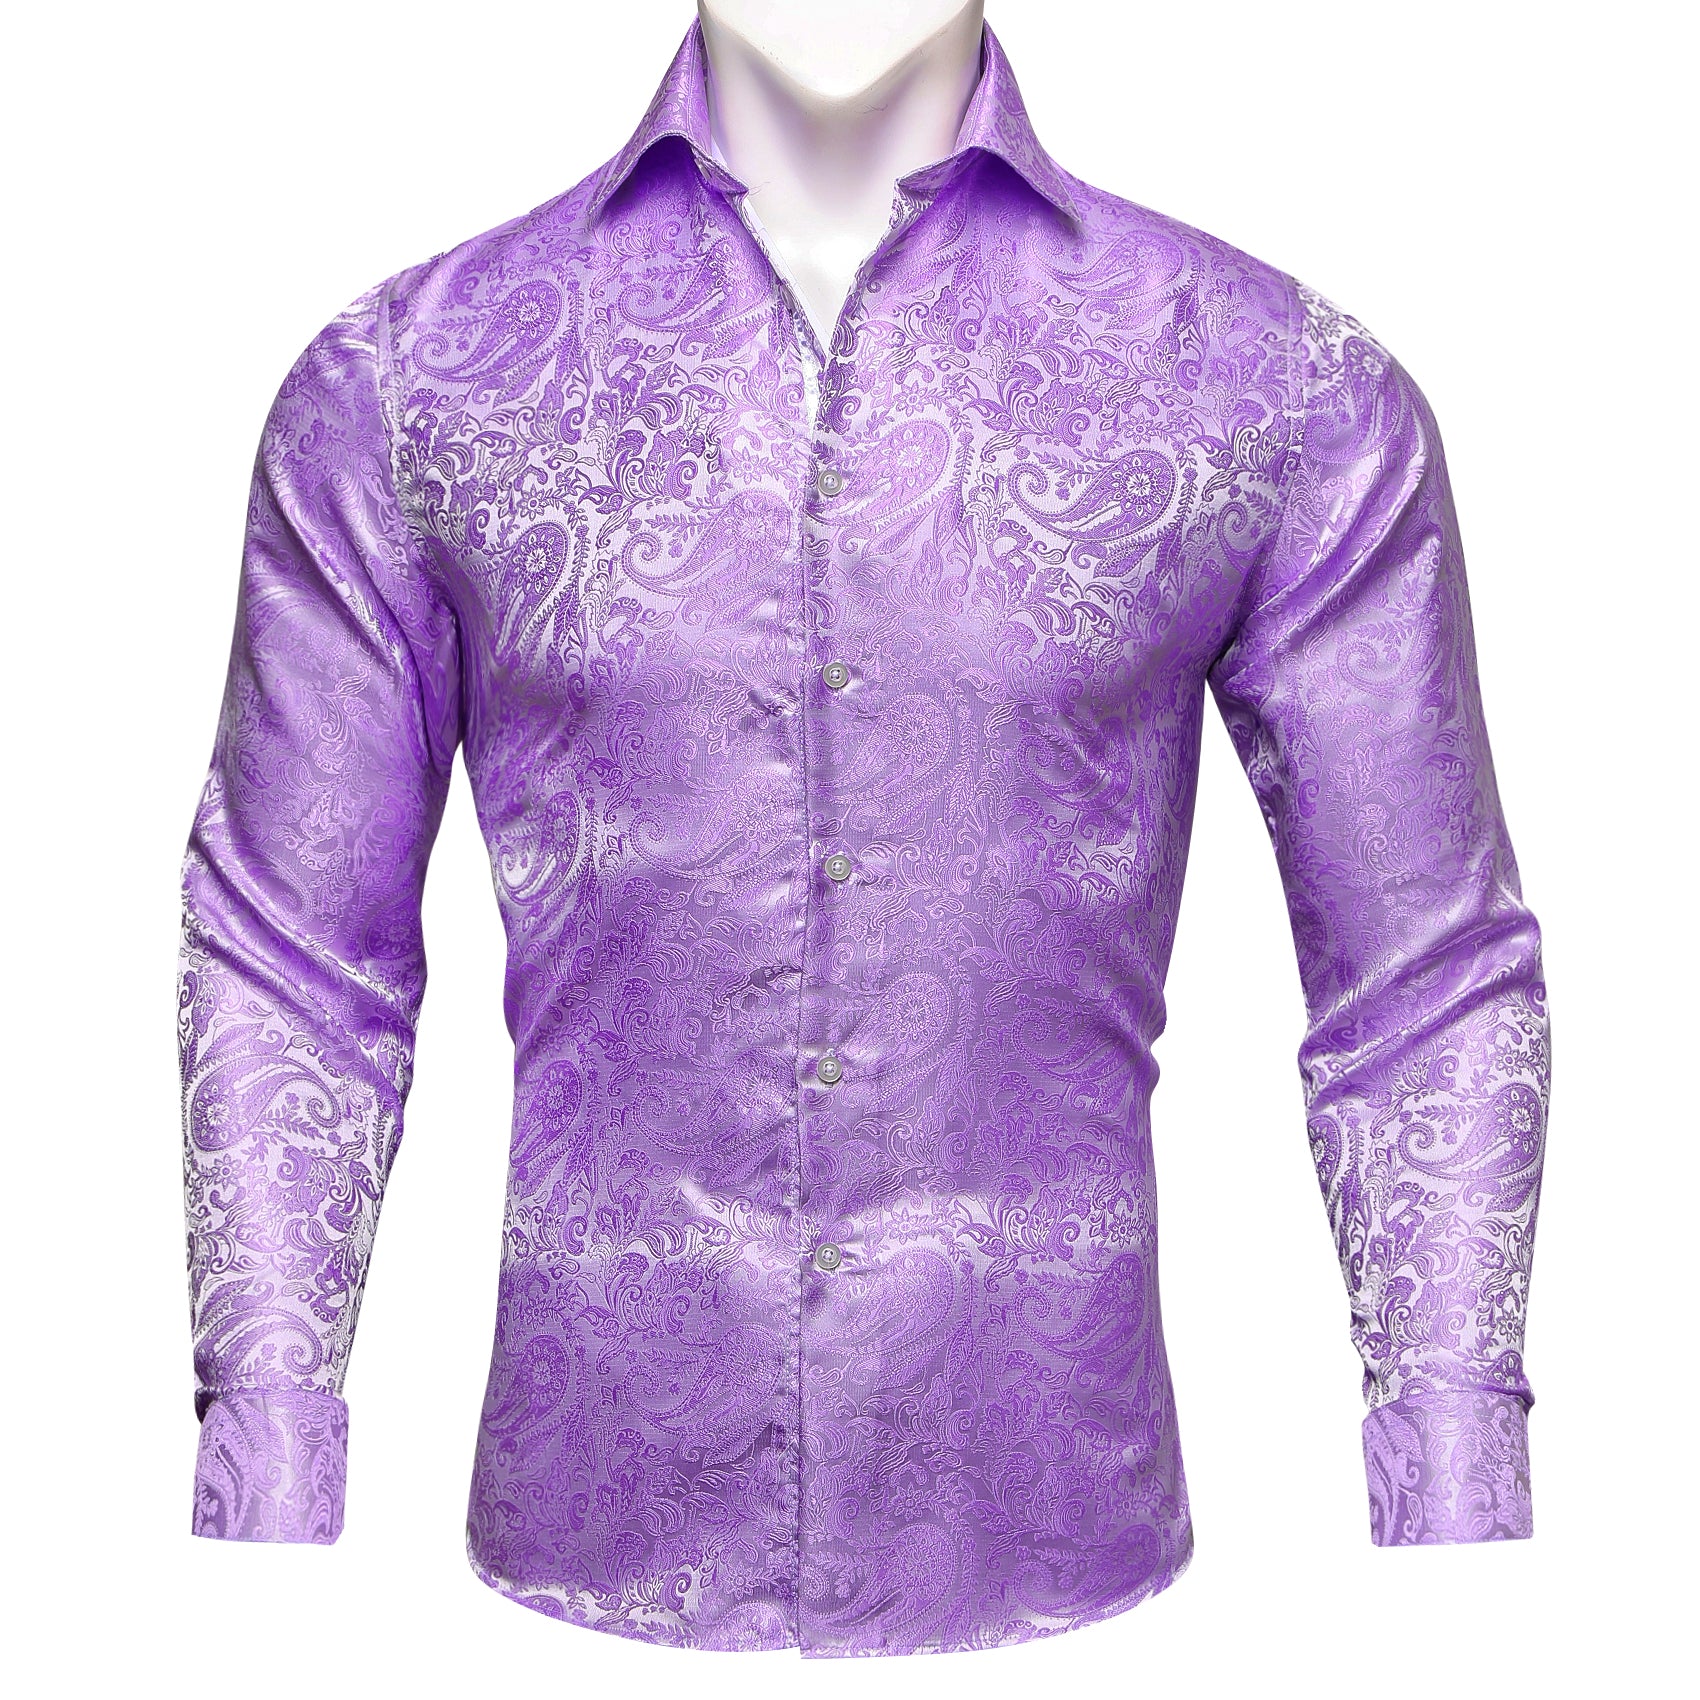 Barry.wang Classy Light Purple Paisley Silk Shirt